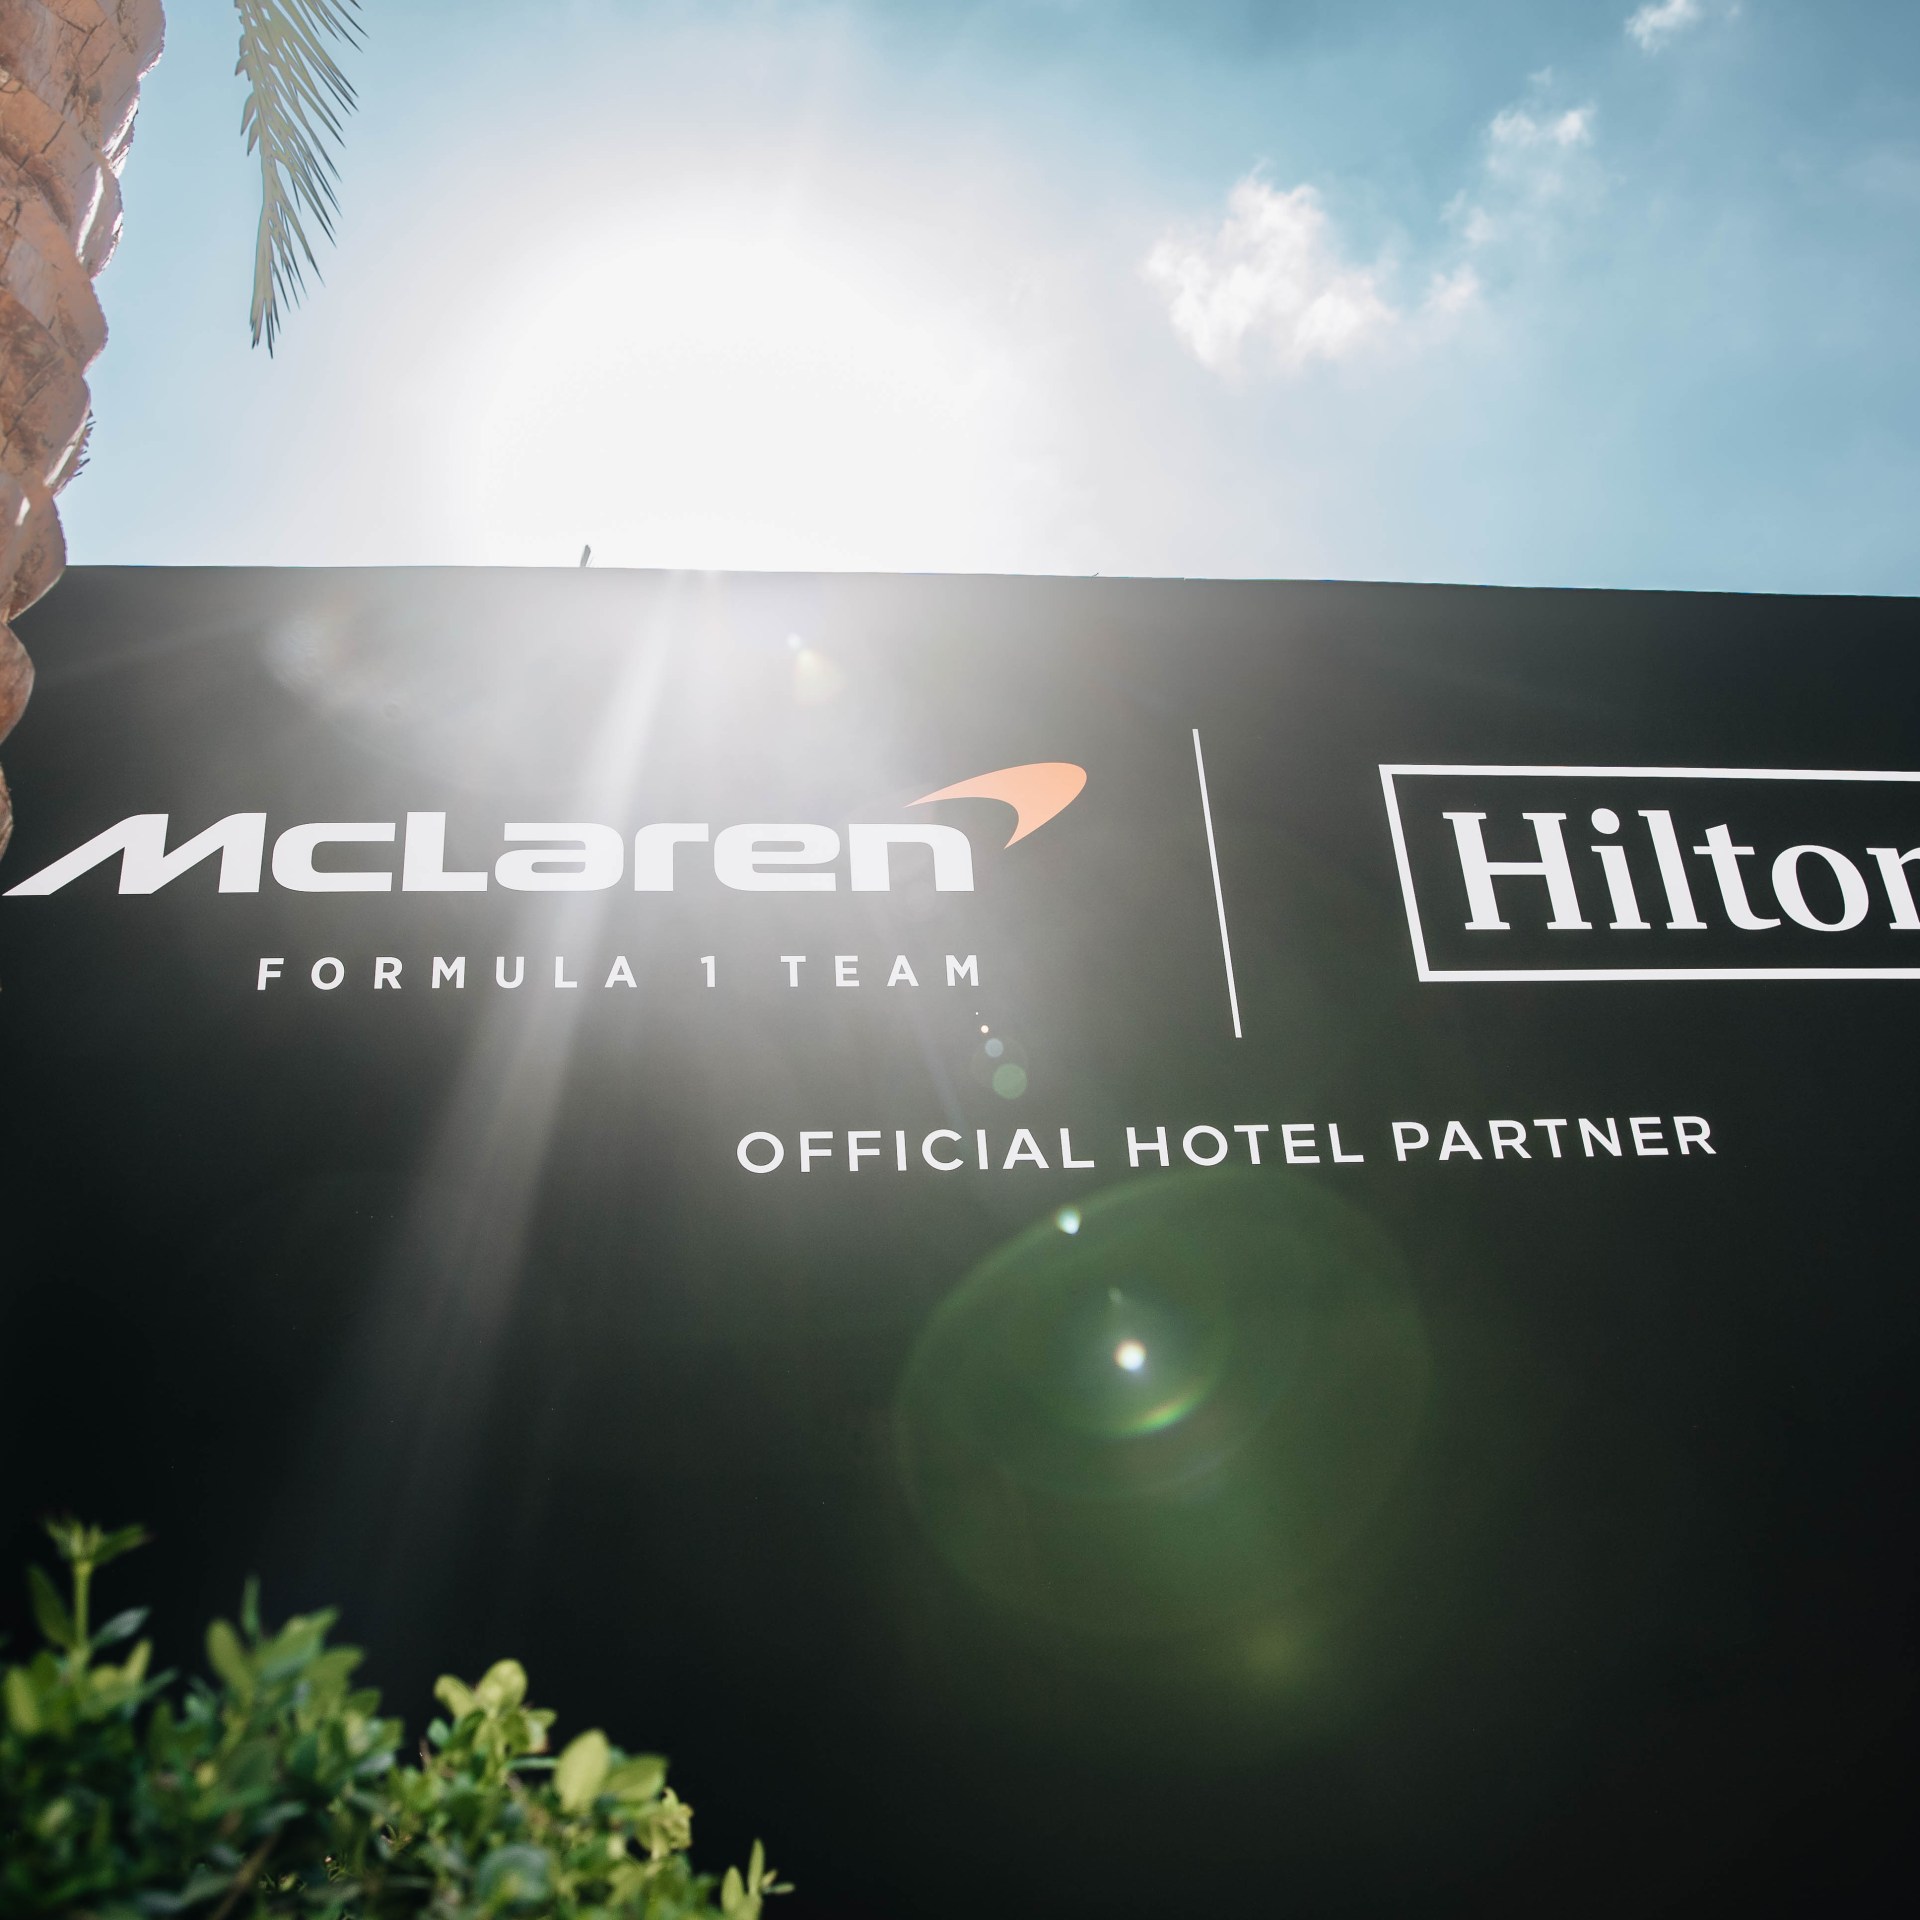 McLaren Formula 1 Team and Hilton - Official Hotel Partner